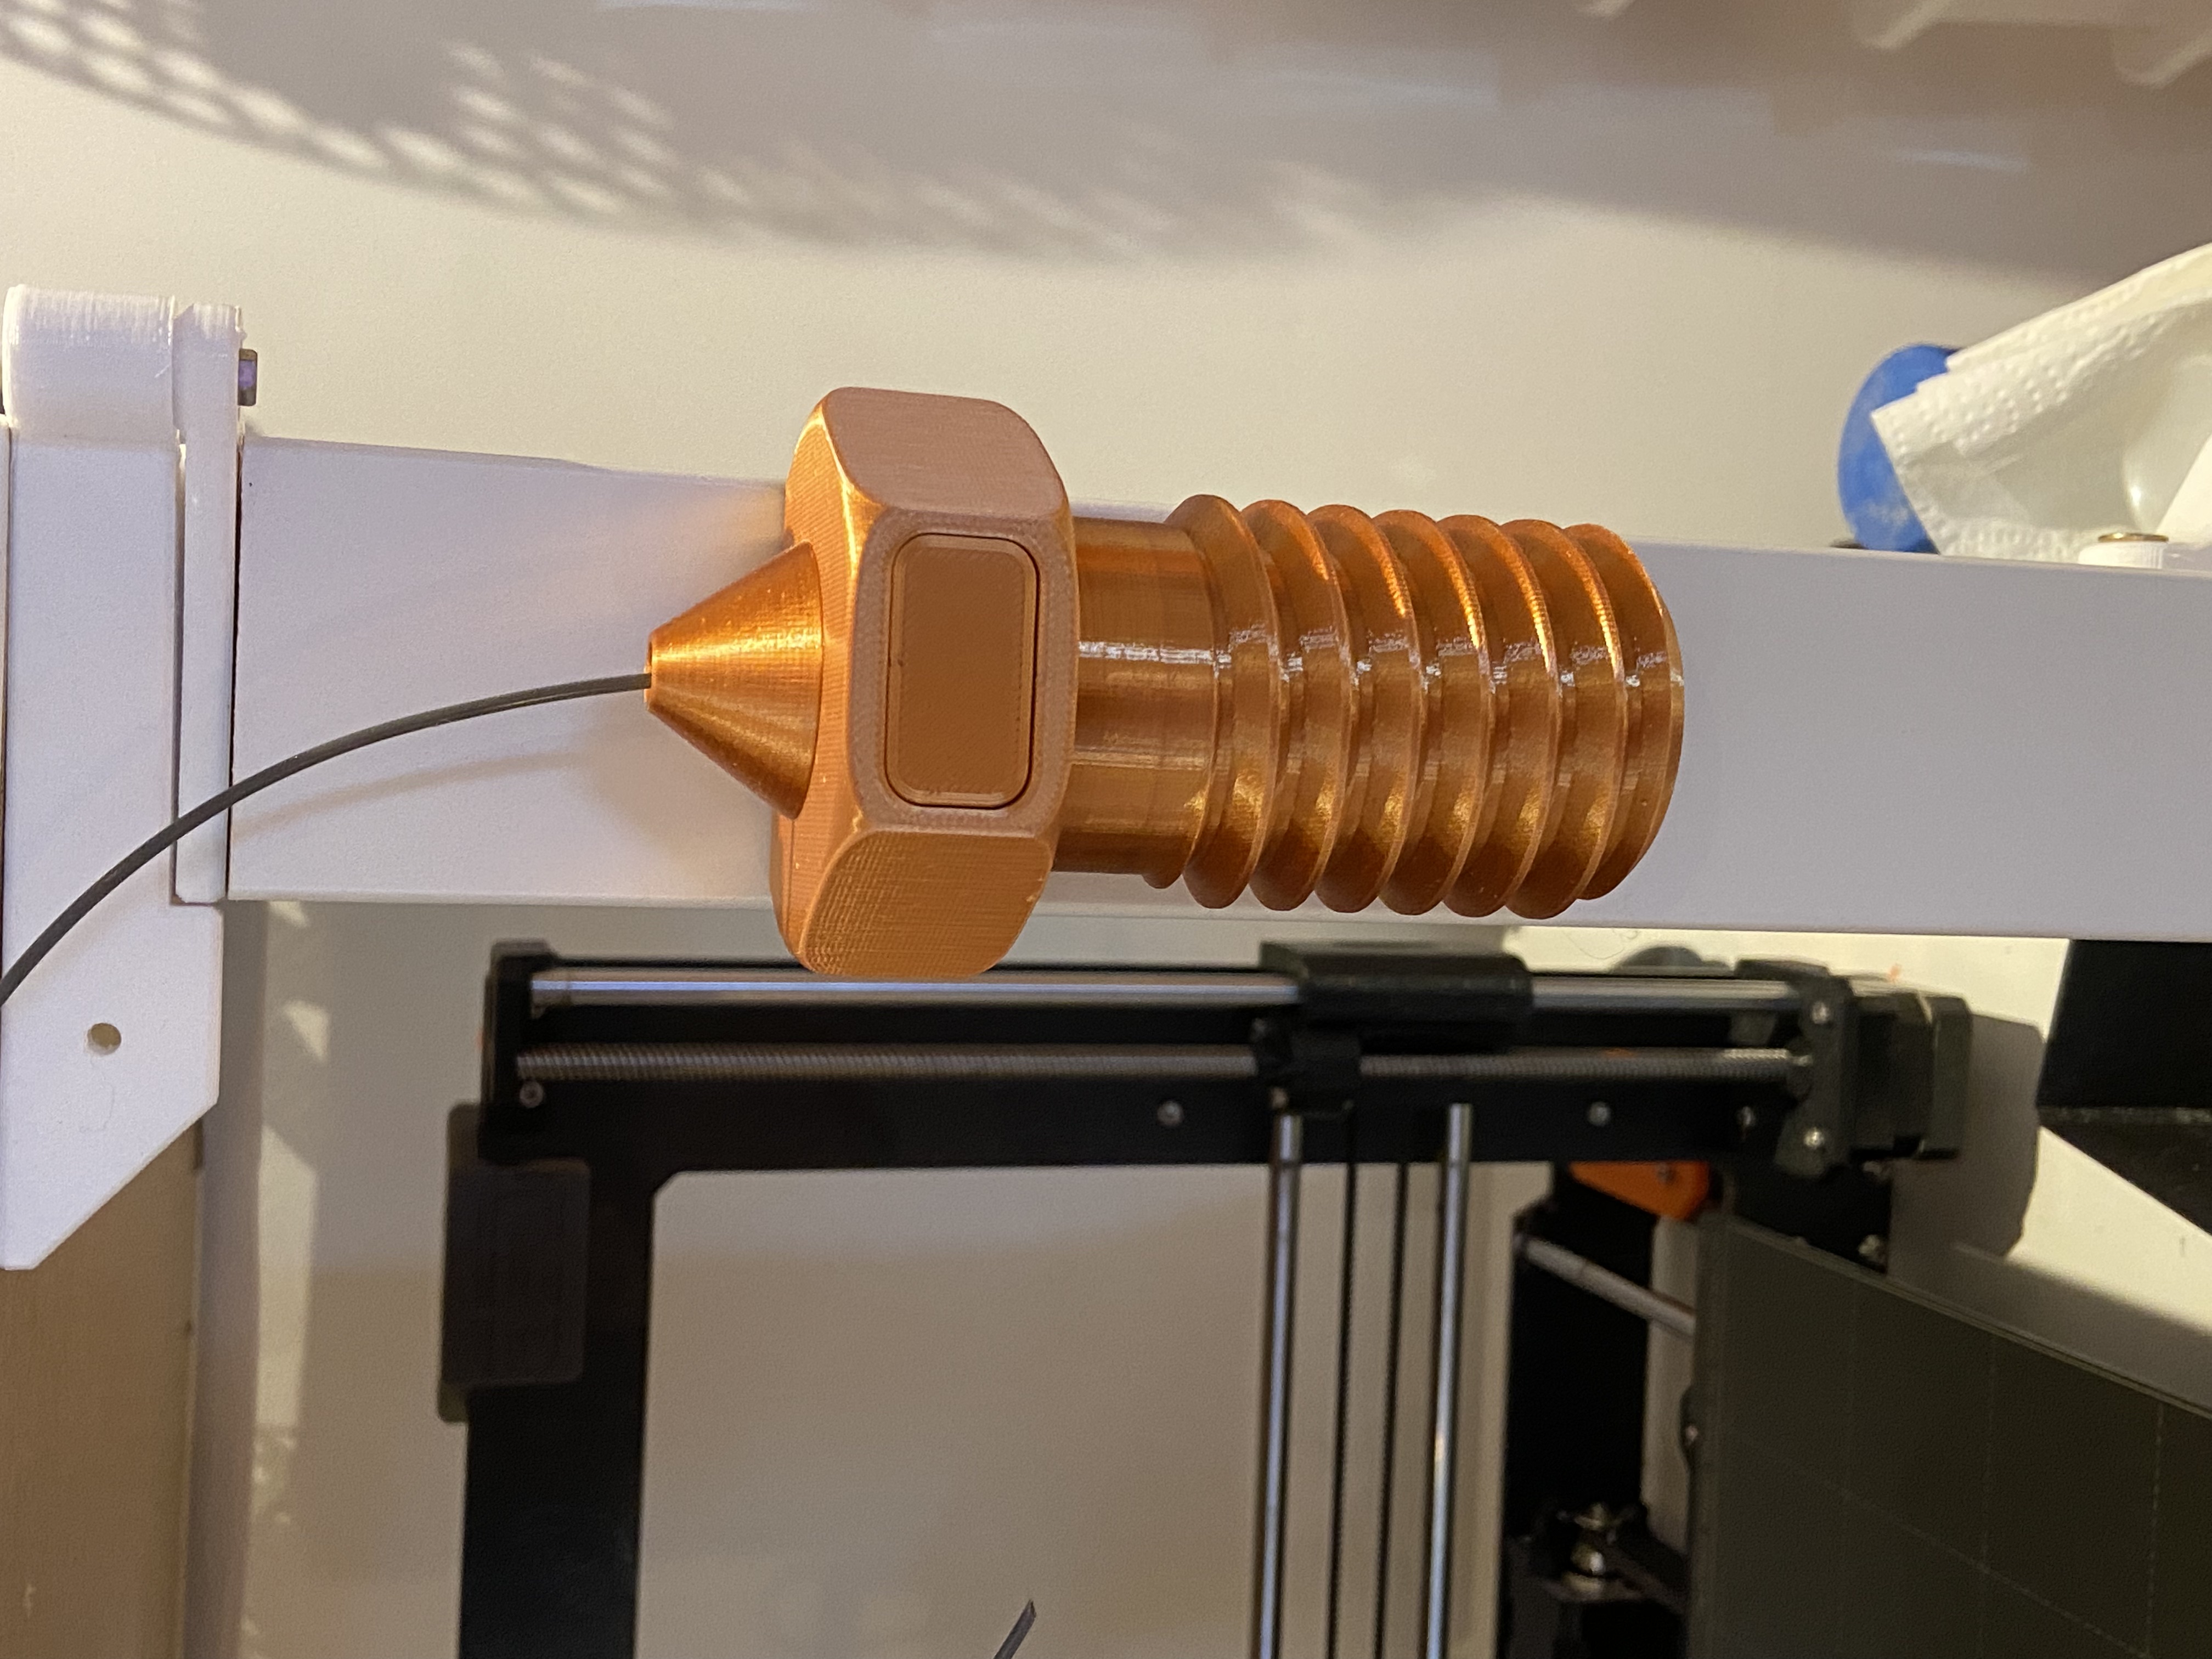 Giant nozzle filament cutter